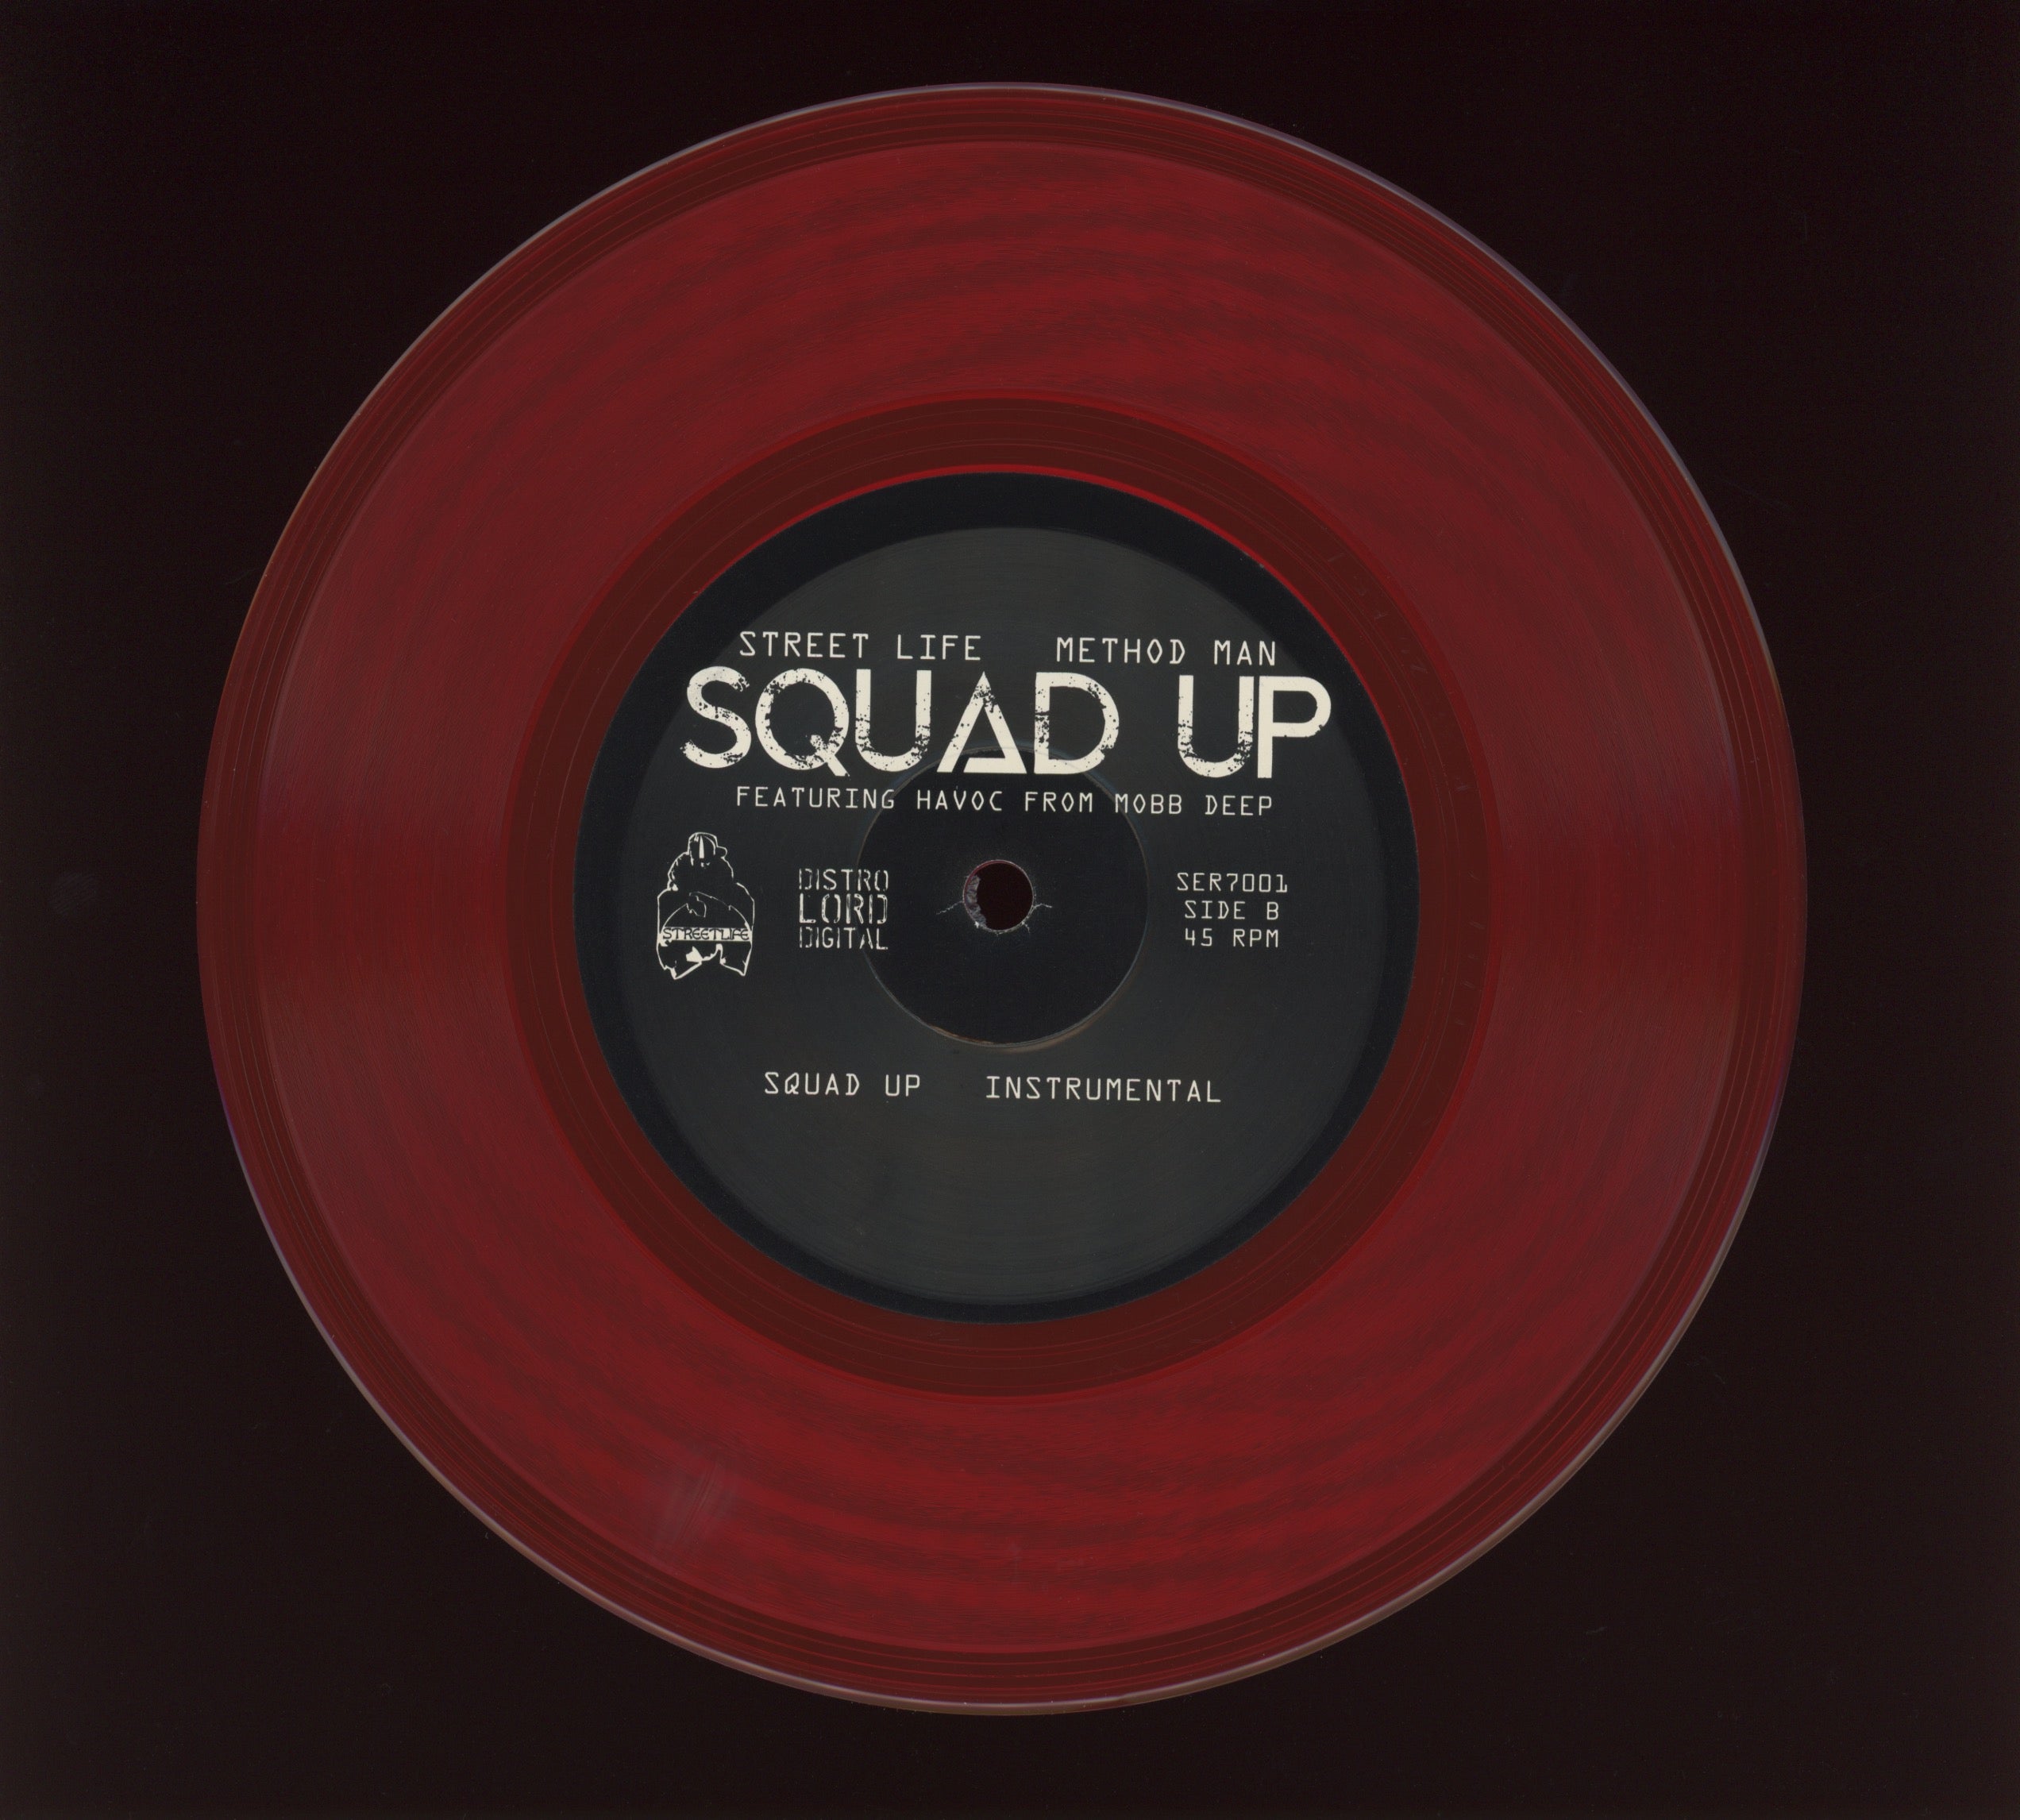 Street Life - Squad Up on Street Education Red Vinyl